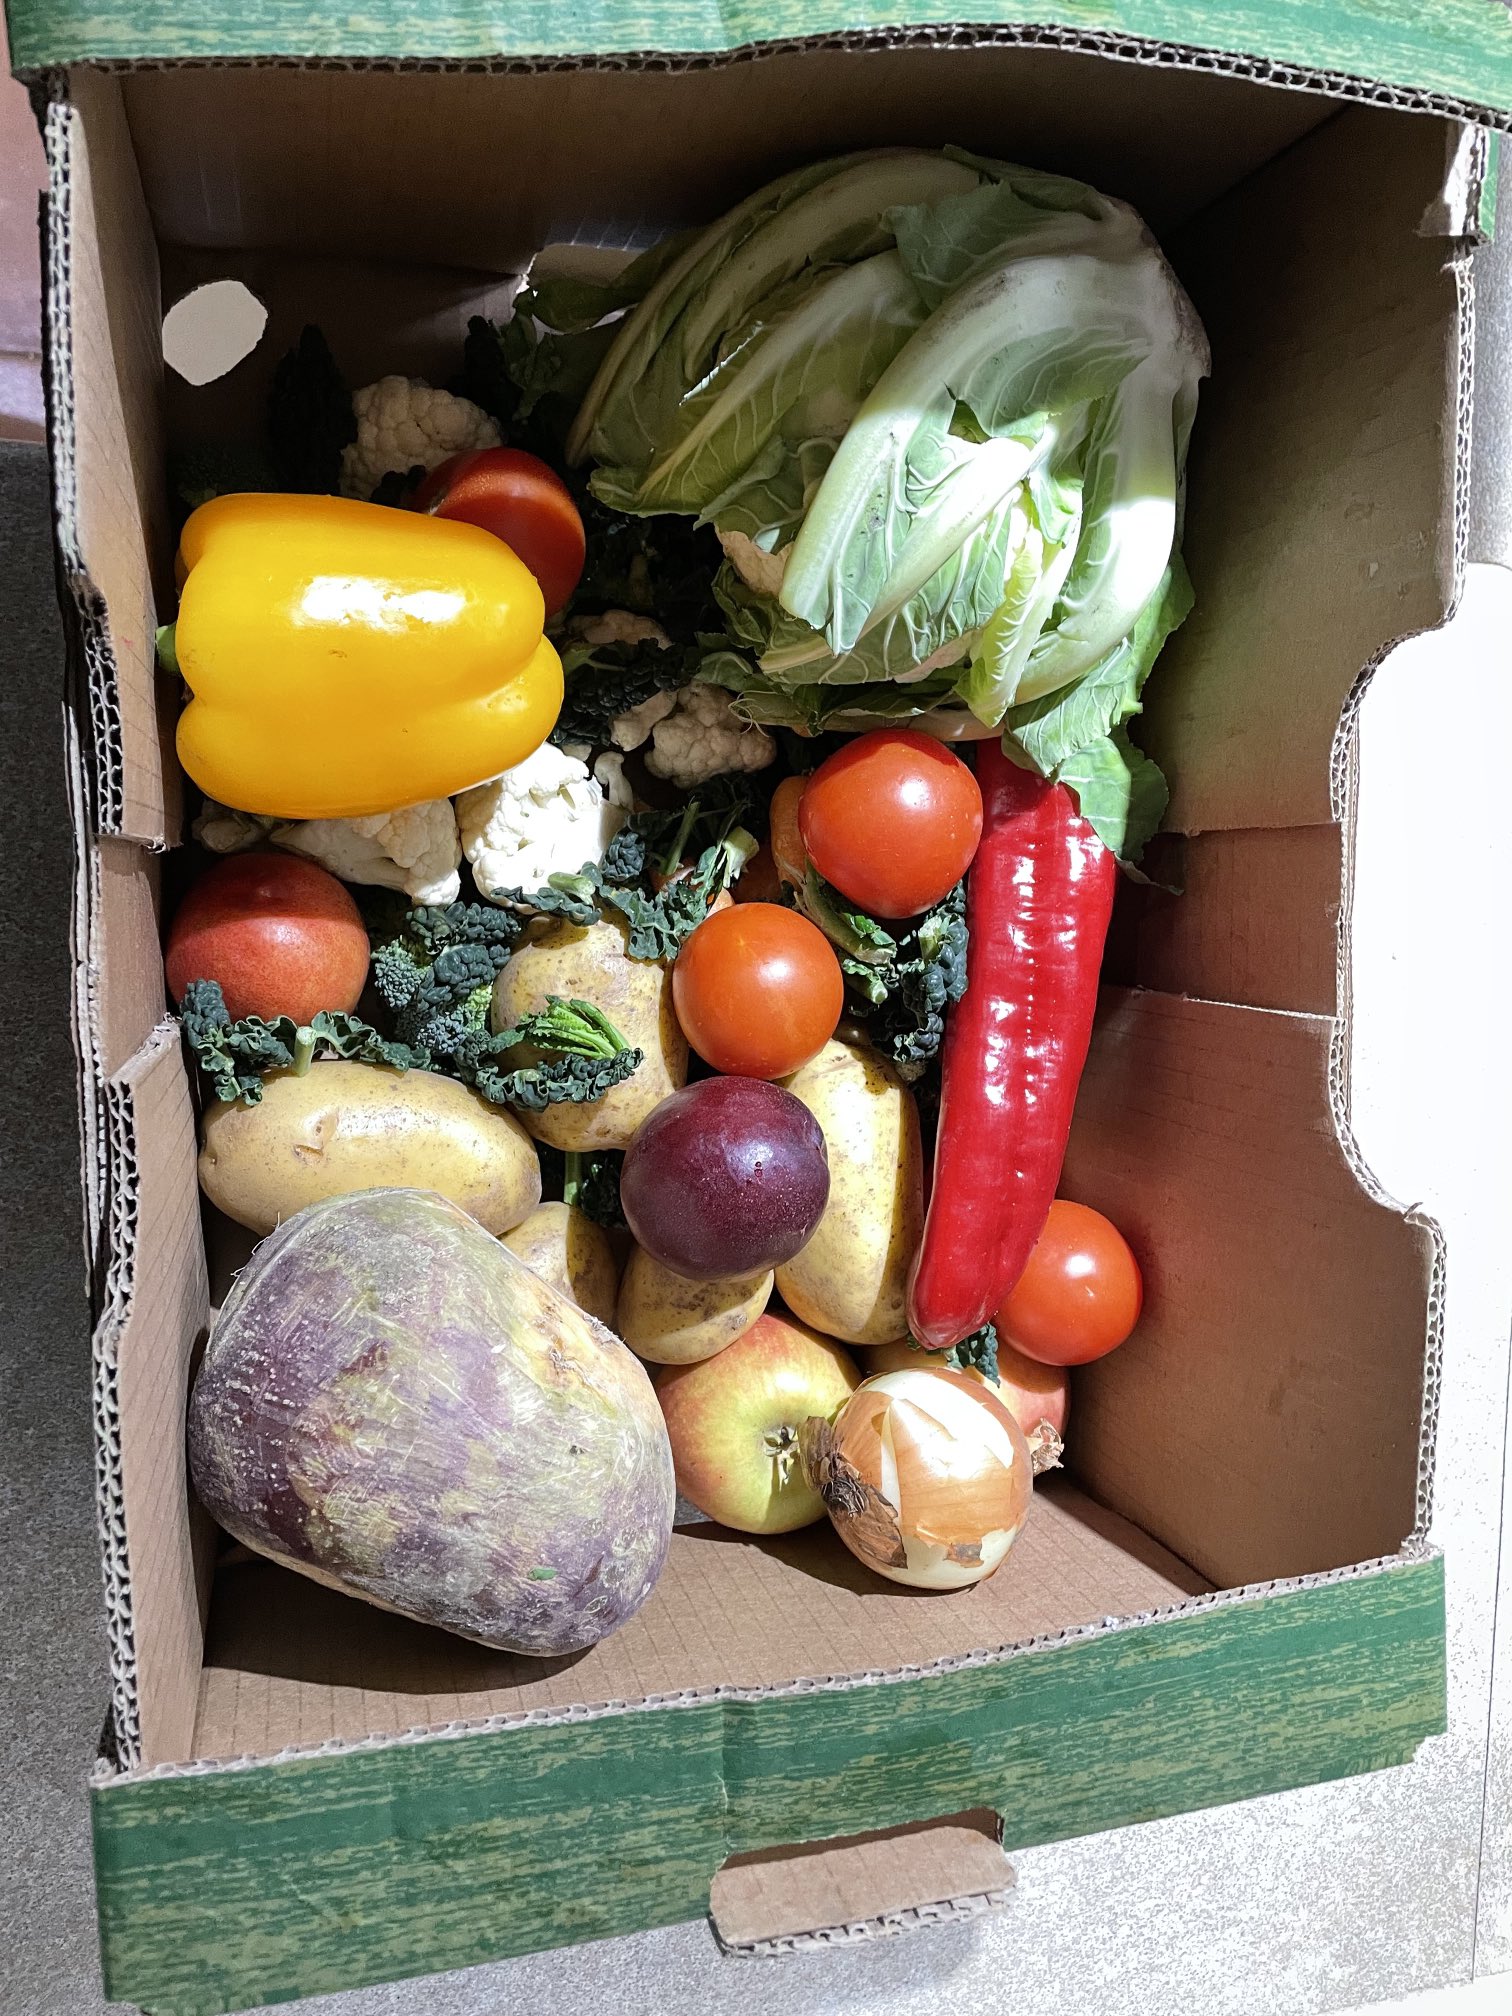 WildlifeKate on Twitter: "£1.50 Lidl veg box…. Plenty there soup and a meal! 😁 https://t.co/eGENuJeCVr" / Twitter